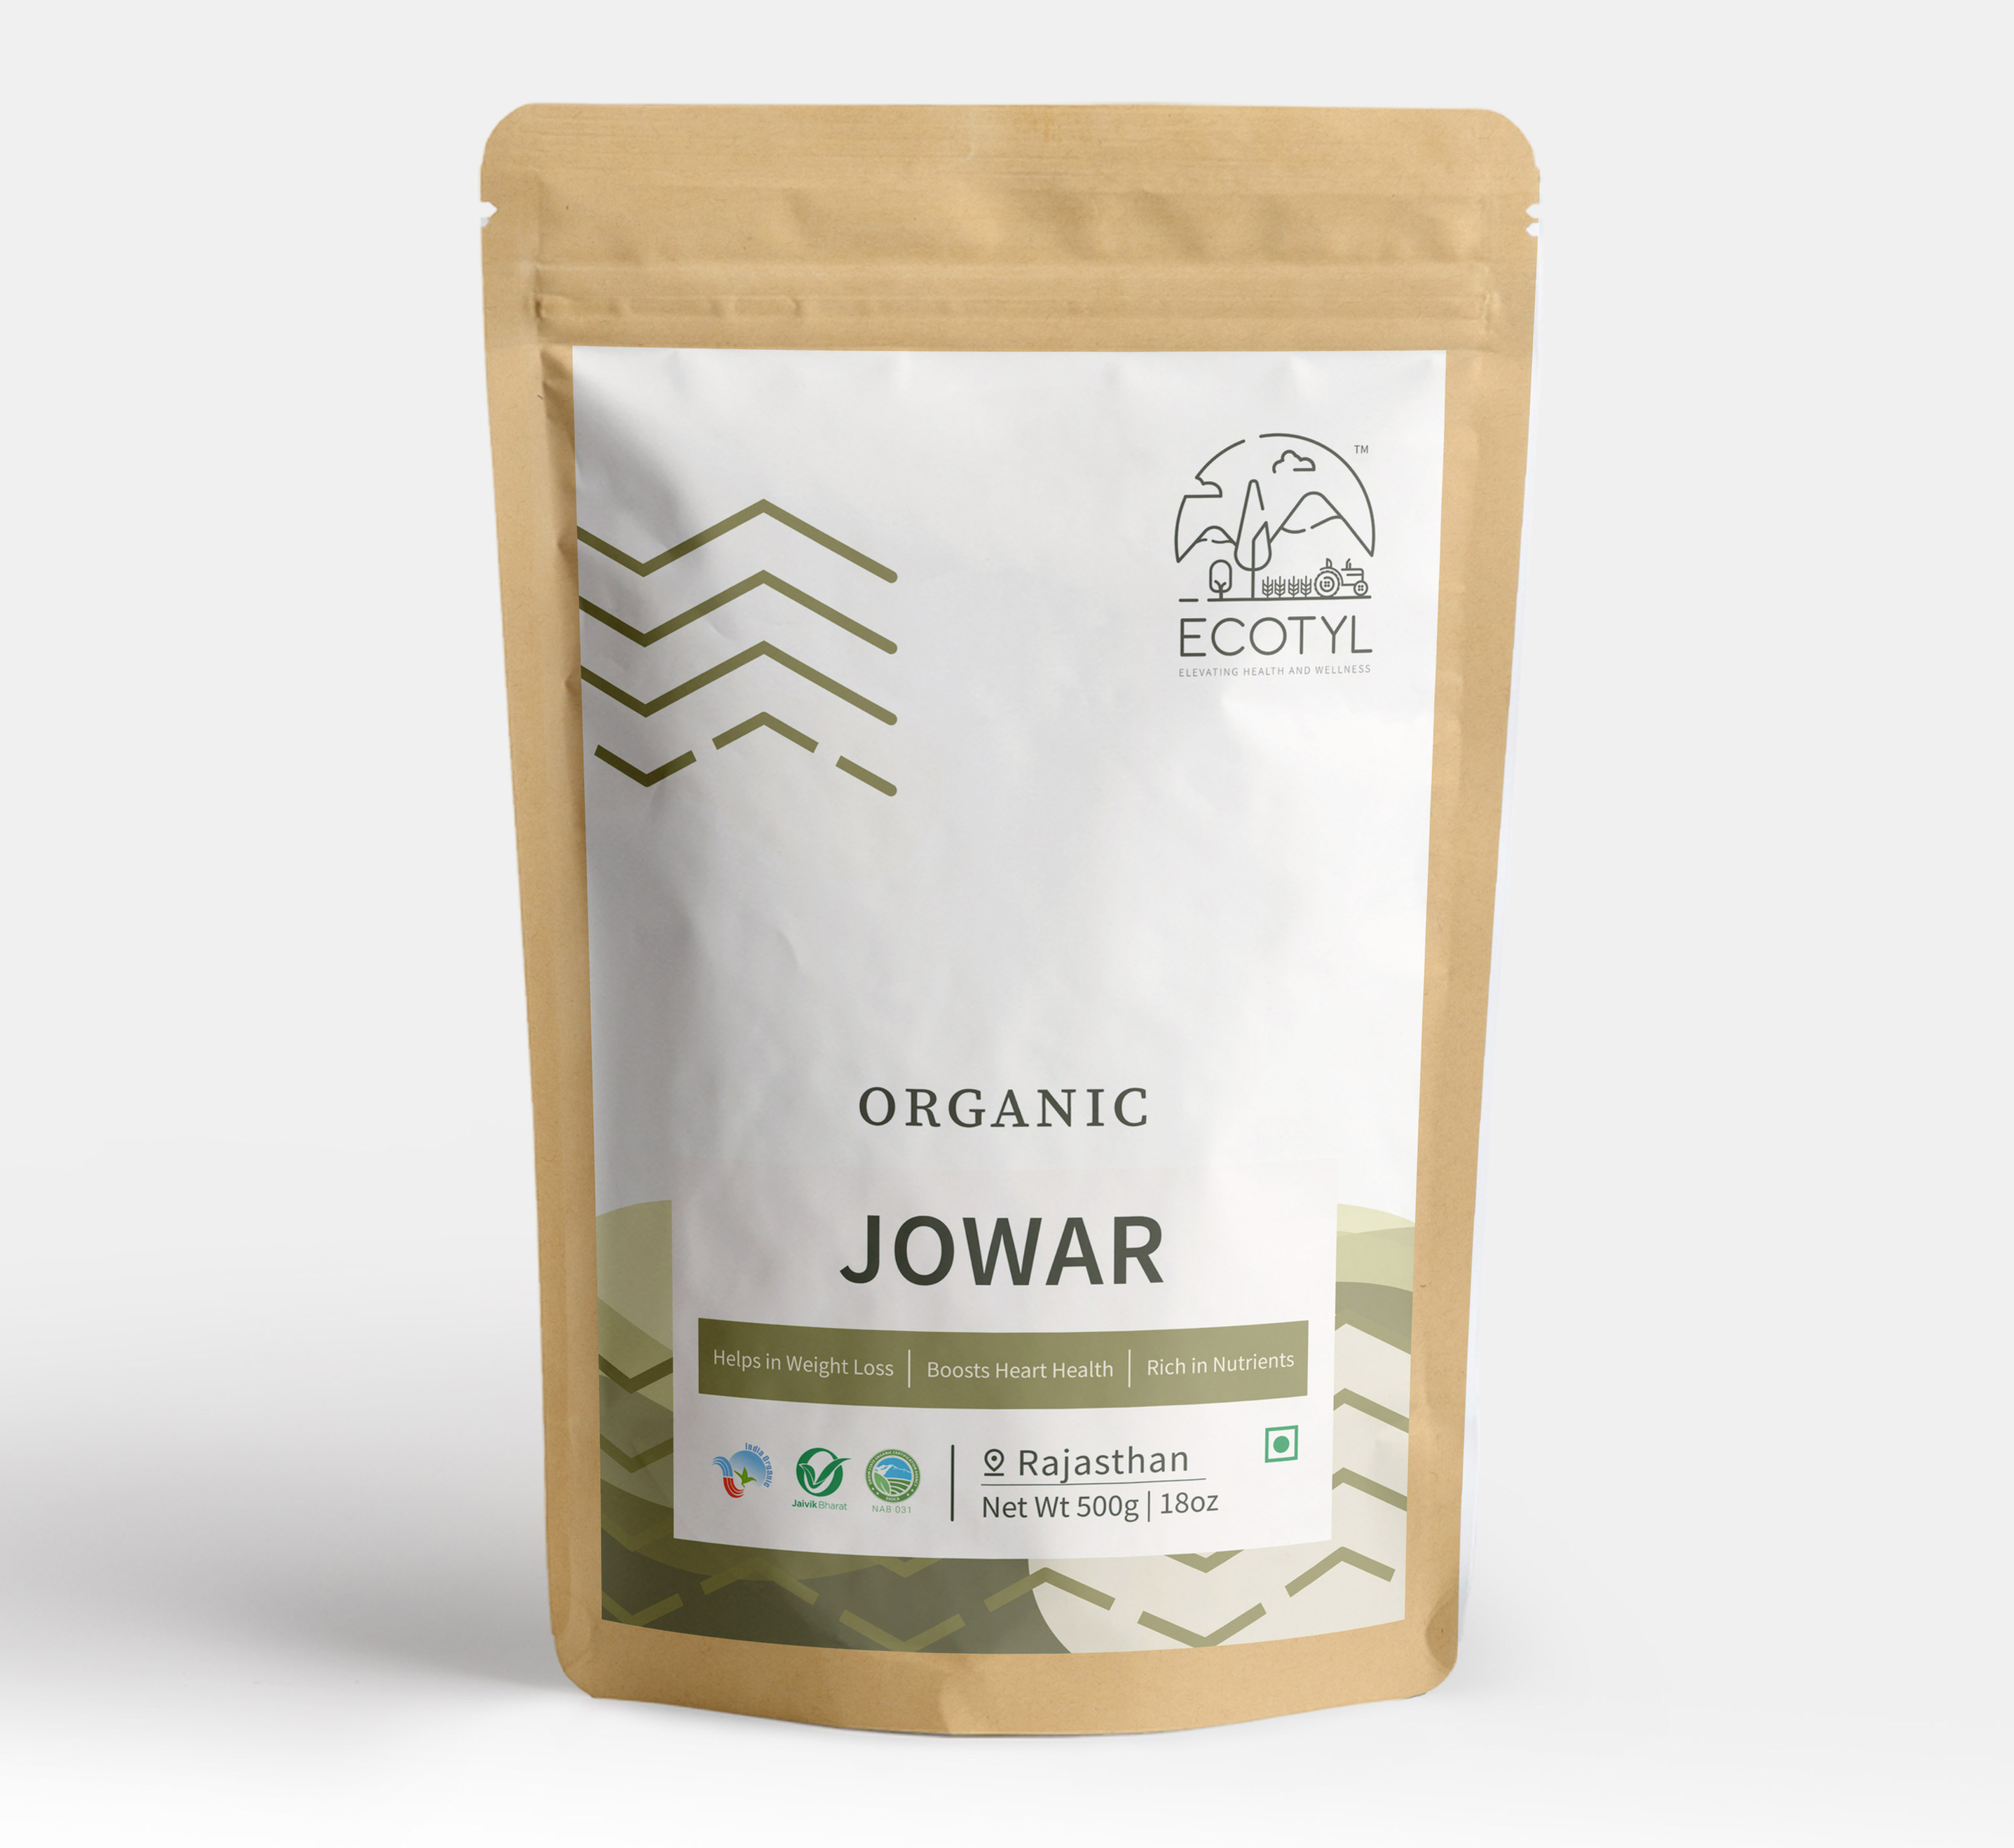 Buy Ecotyl Organic Jowar - 500 g at Best Price Online